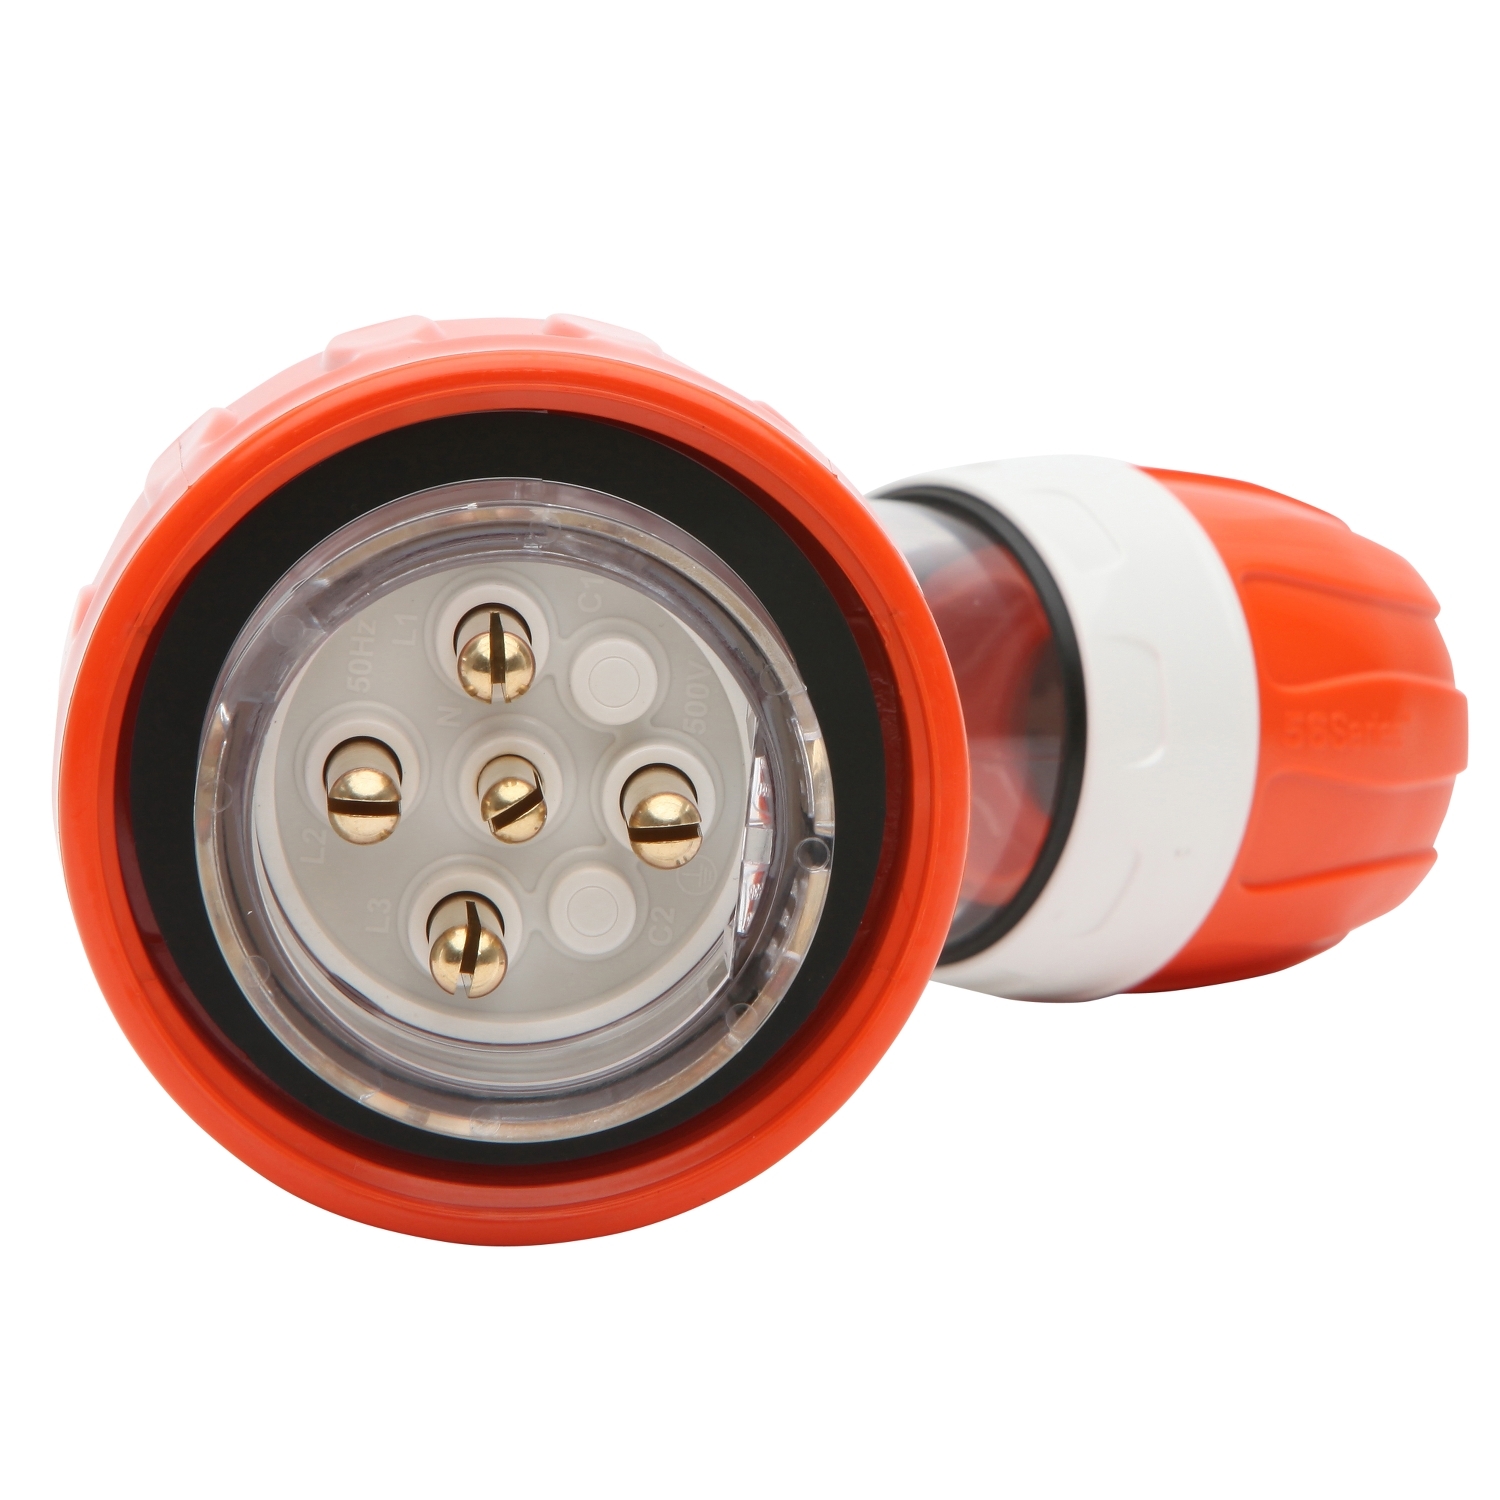 PDL 56 Series - Plug Angled 20A 500V 3-Phase 5-Round Pin IP66 - Orange